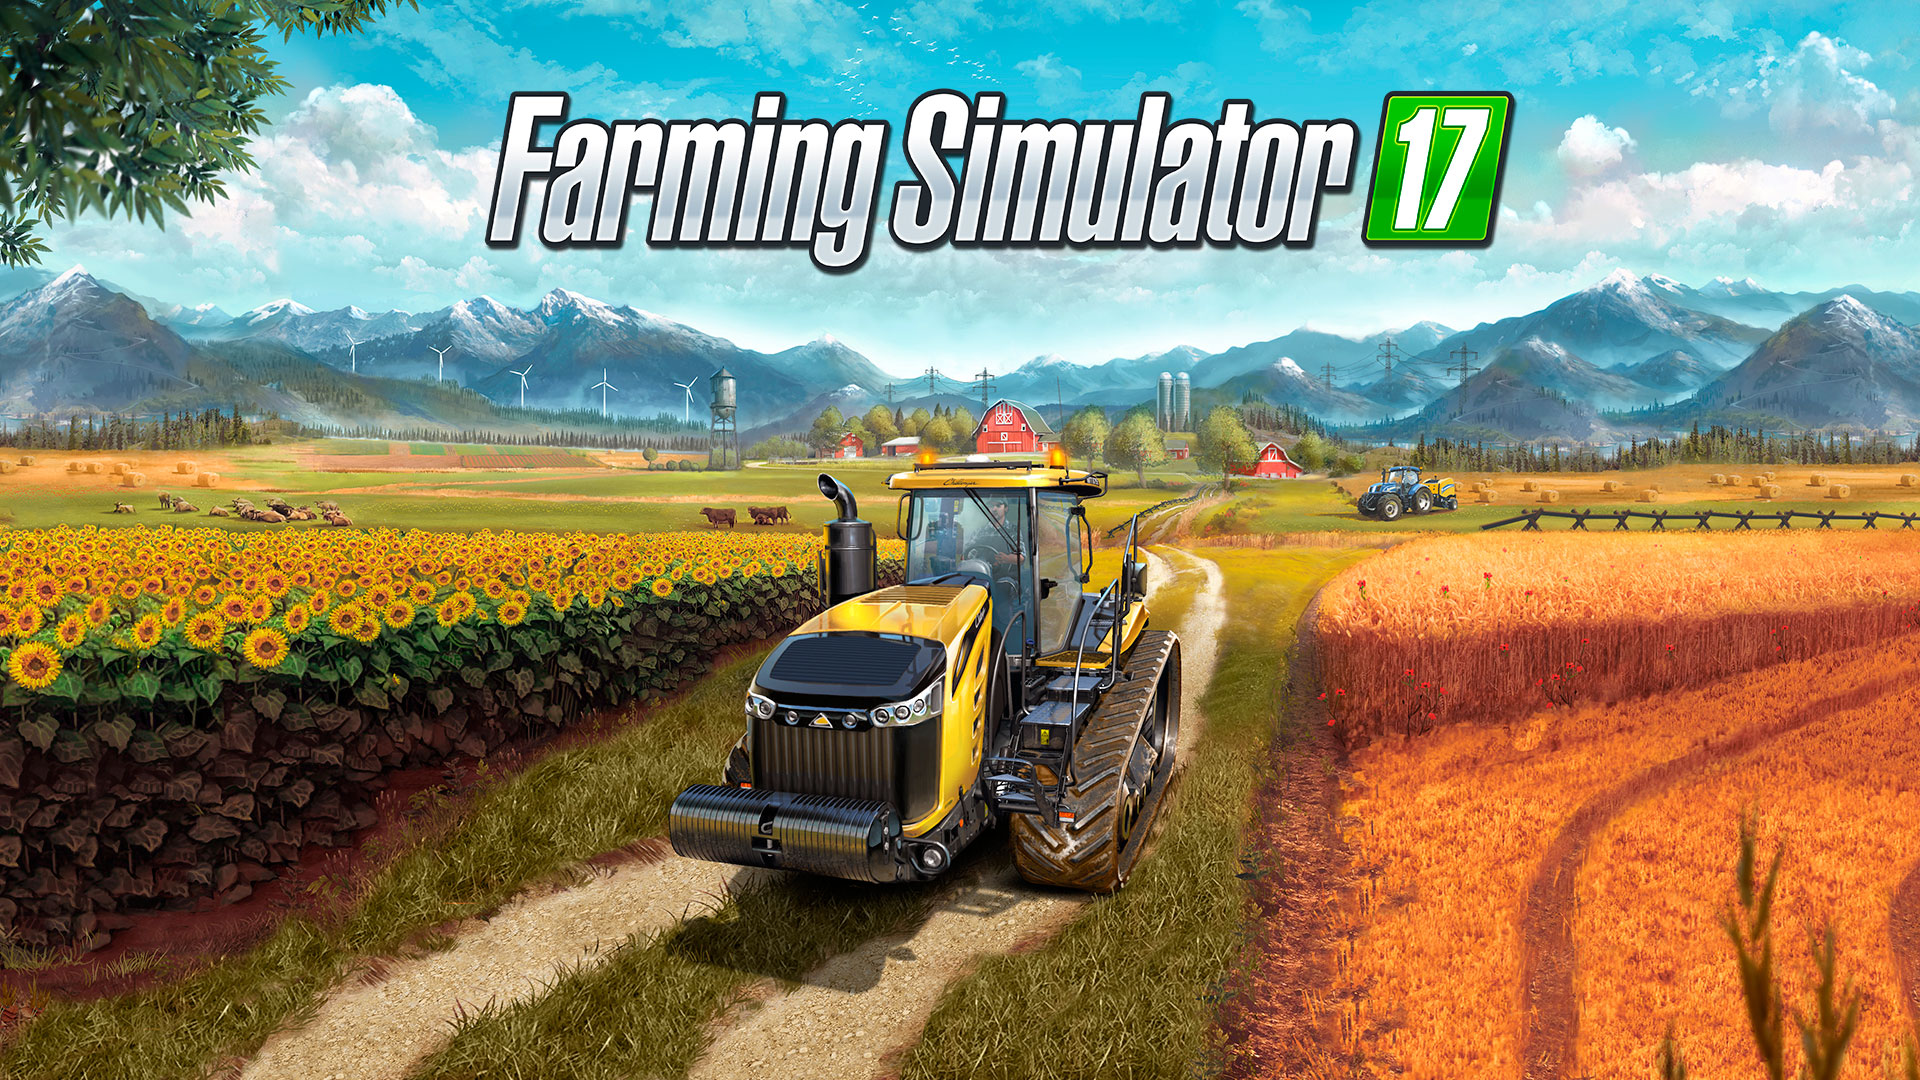 dlc maps for farming simulator 17 pc download